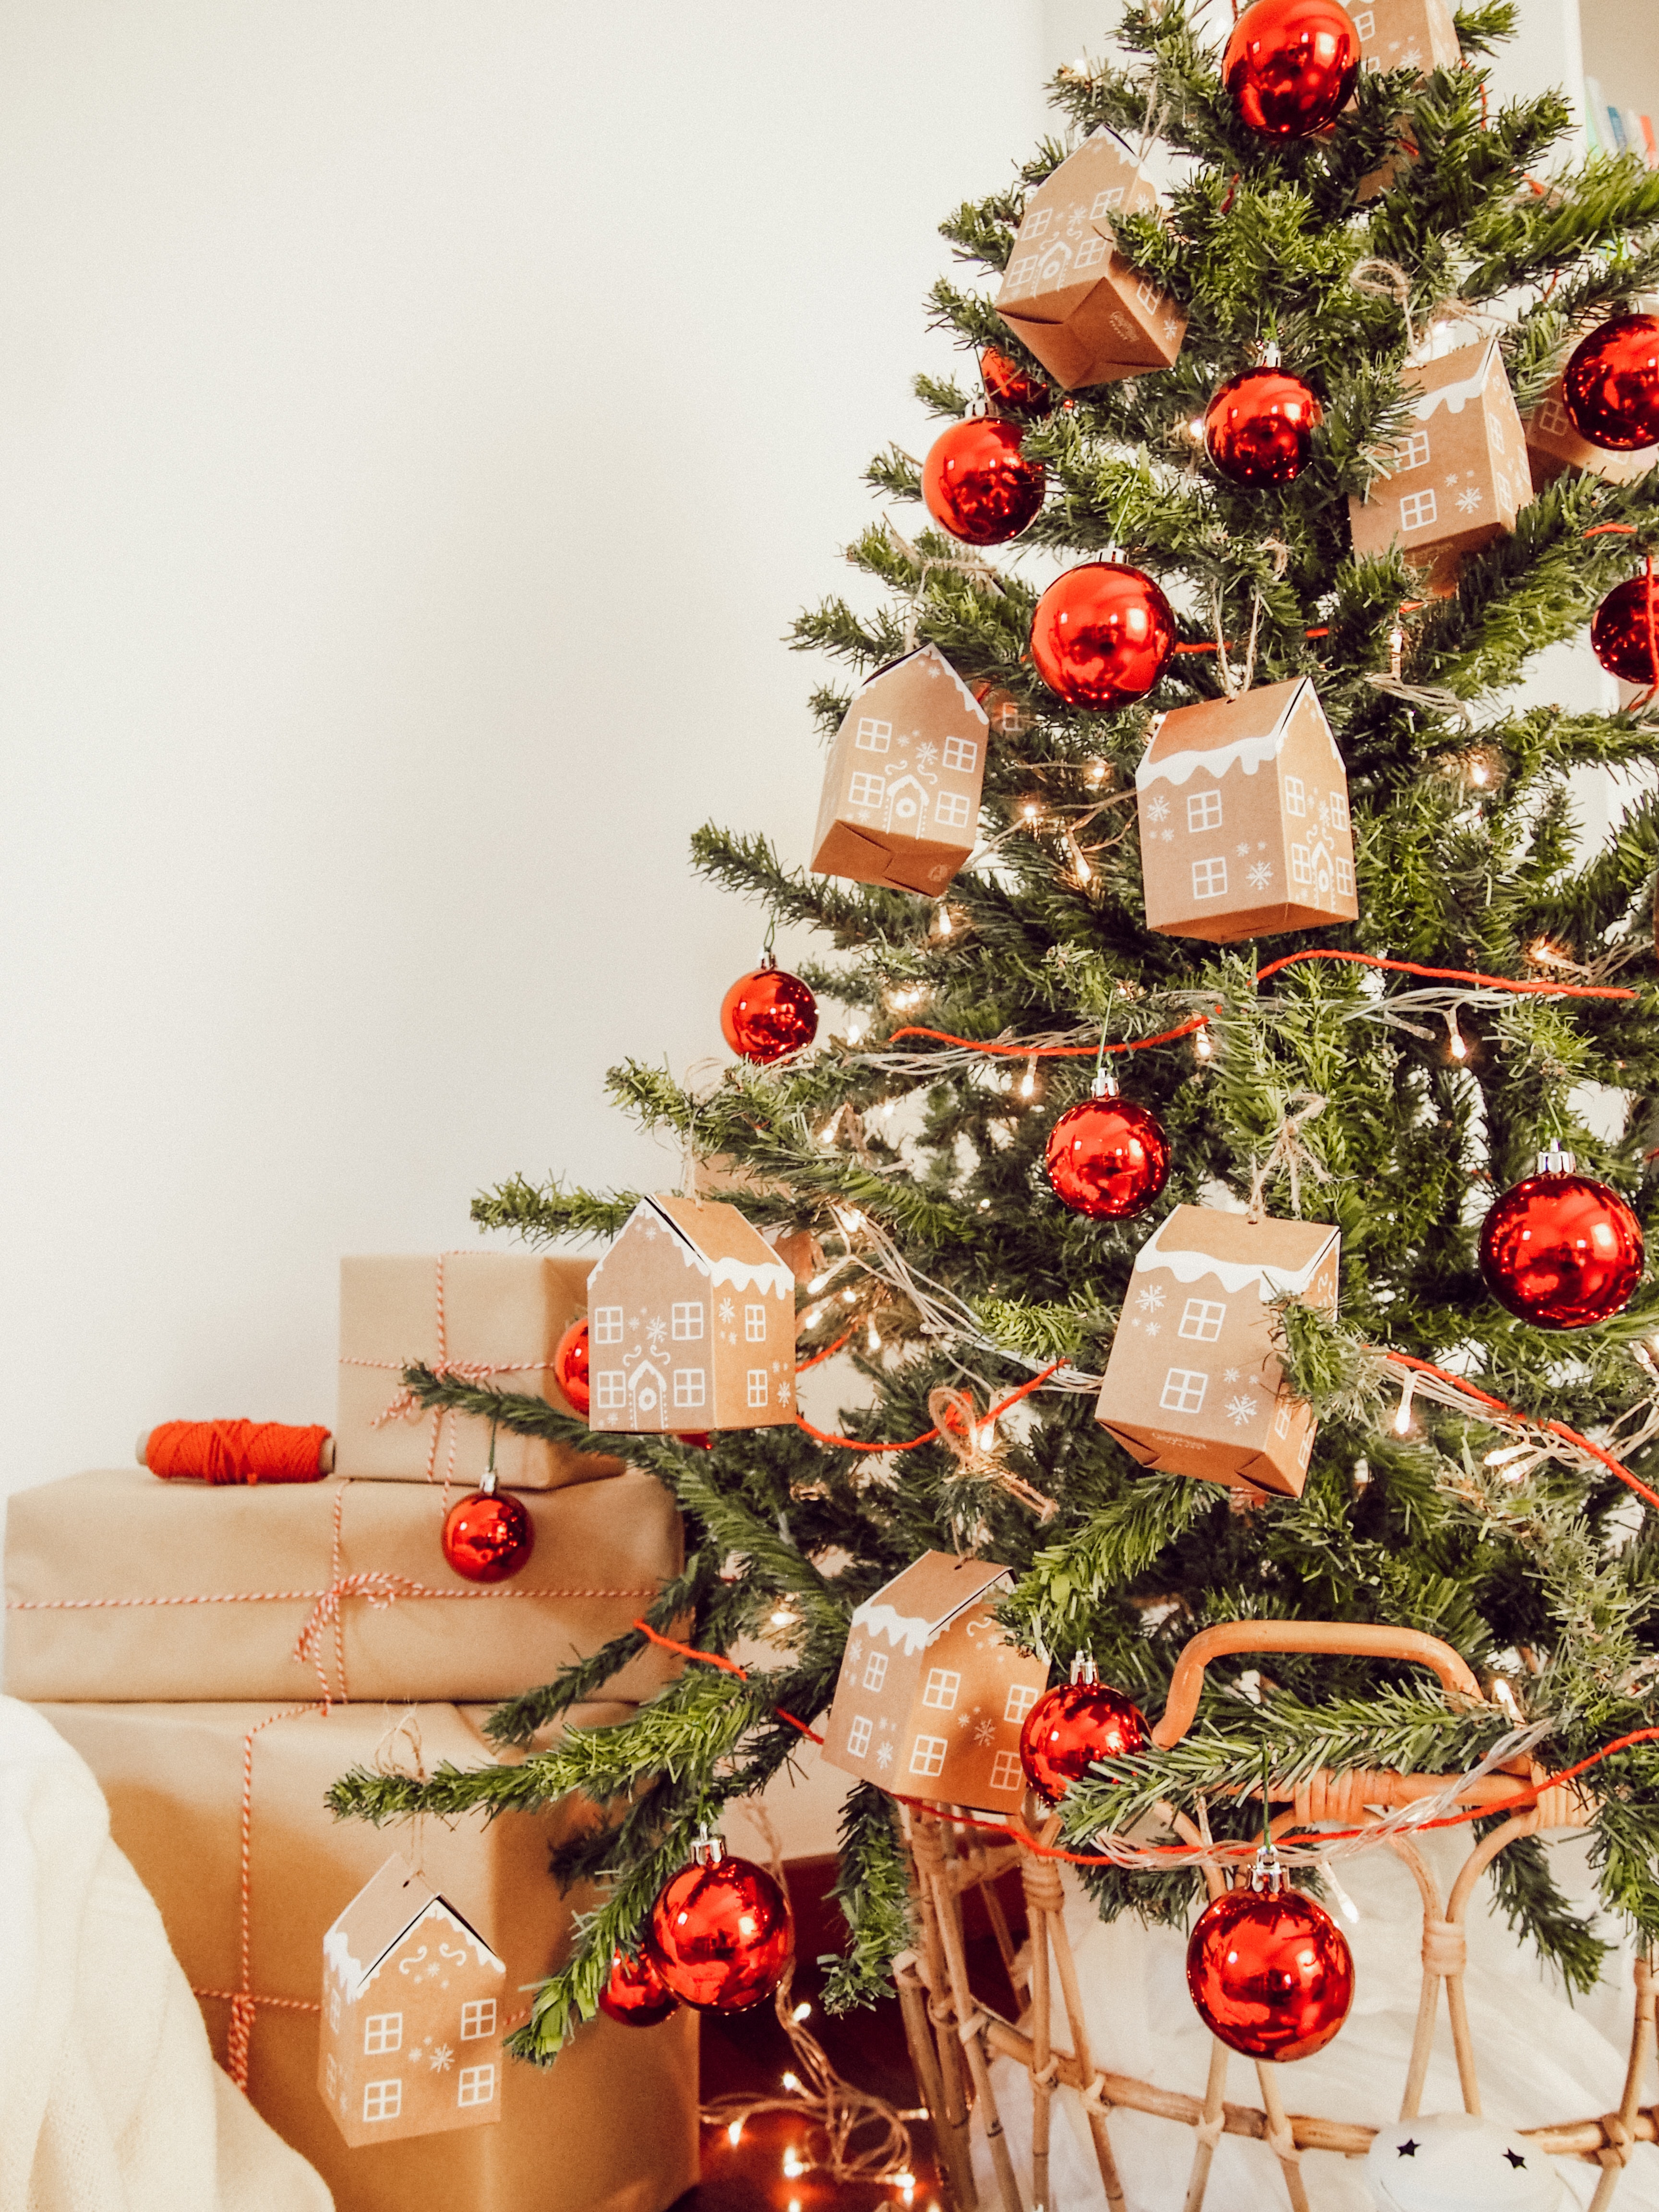 Christmas | Christmas Tree | Photo by <a href="https://unsplash.com/@marianarascao?utm_source=unsplash&utm_medium=referral&utm_content=creditCopyText">Mariana Rascão</a> on <a href="https://unsplash.com/s/photos/christmas?utm_source=unsplash&utm_medium=referral&utm_content=creditCopyText">Unsplash</a>